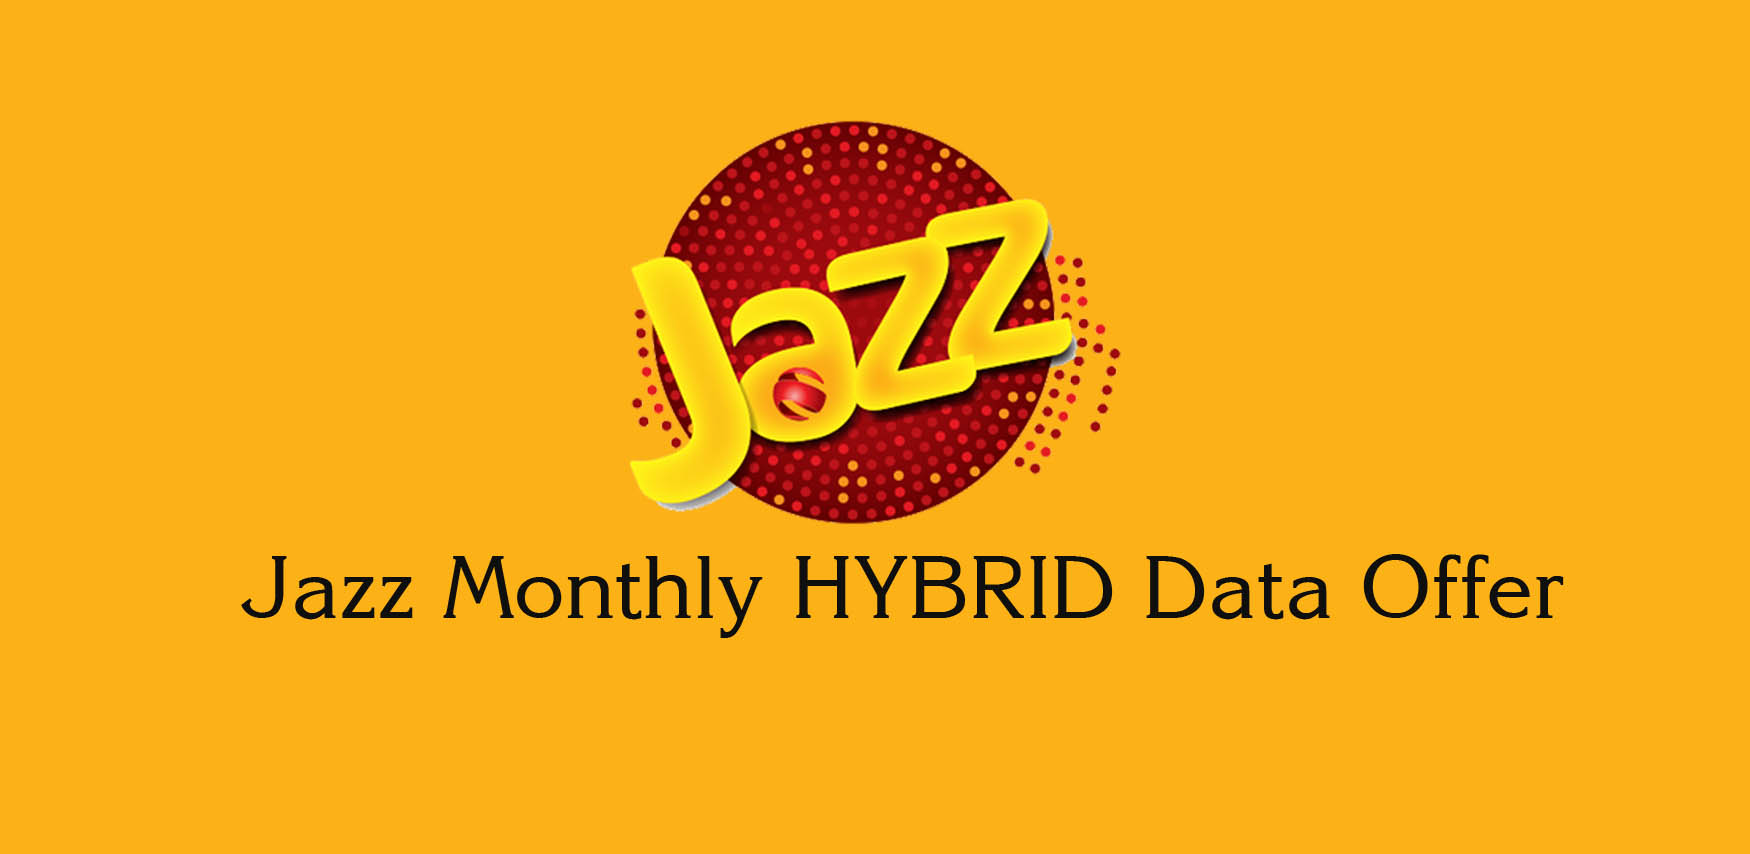 Jazz Monthly HYBRID Data Offer